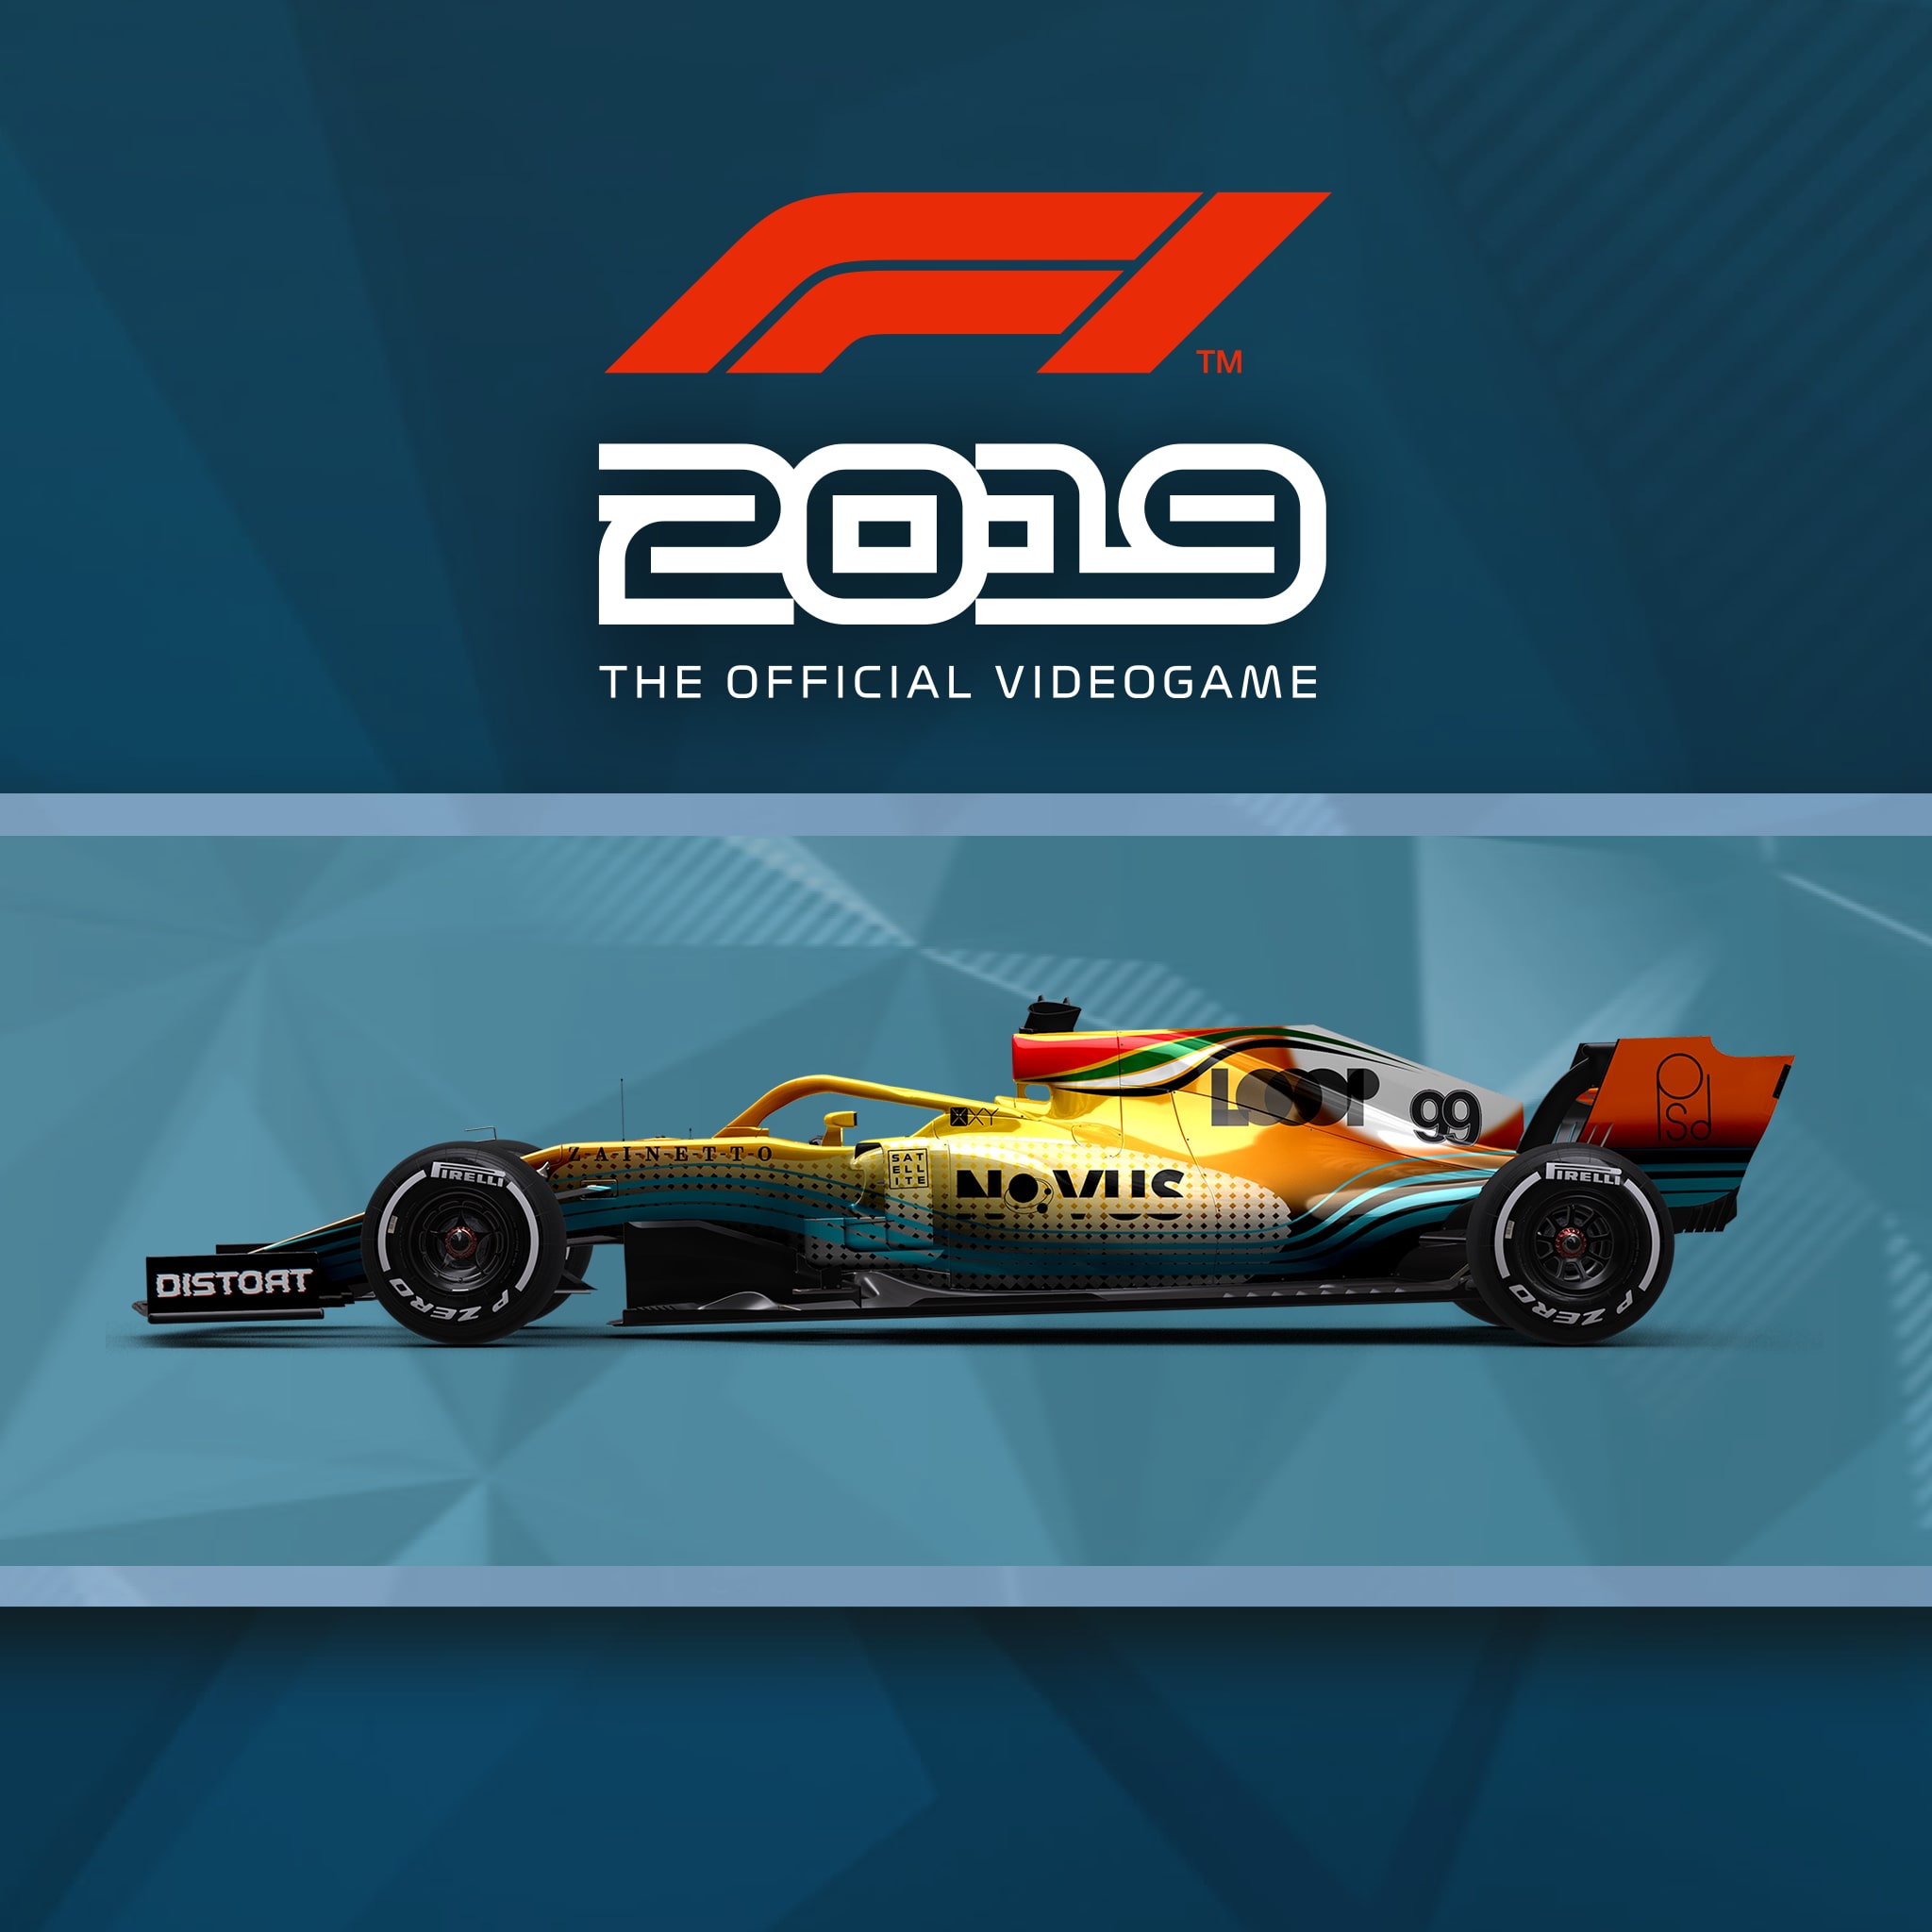 F1® 2019: Car Livery 'Abu Dhabi Grand Prix'